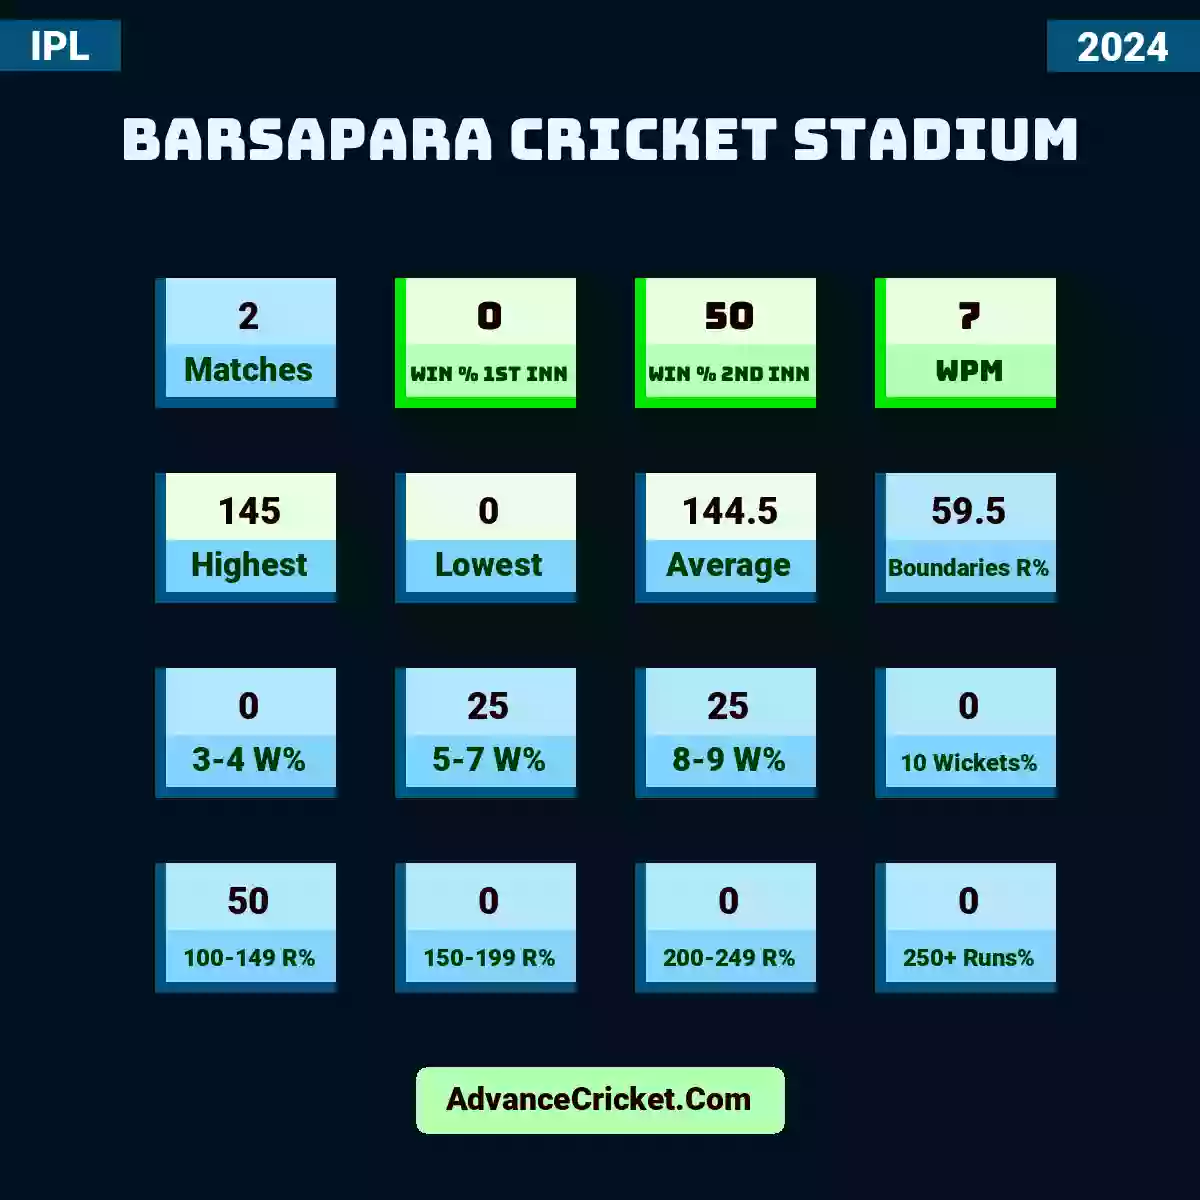 Image showing Barsapara Cricket Stadium IPL 2024 with Matches: 2, Win % 1st Inn: 0, Win % 2nd Inn: 50, WPM: 7, Highest: 145, Lowest: 0, Average: 144.5, Boundaries R%: 59.5, 3-4 W%: 0, 5-7 W%: 25, 8-9 W%: 25, 10 Wickets%: 0, 100-149 R%: 50, 150-199 R%: 0, 200-249 R%: 0, 250+ Runs%: 0.